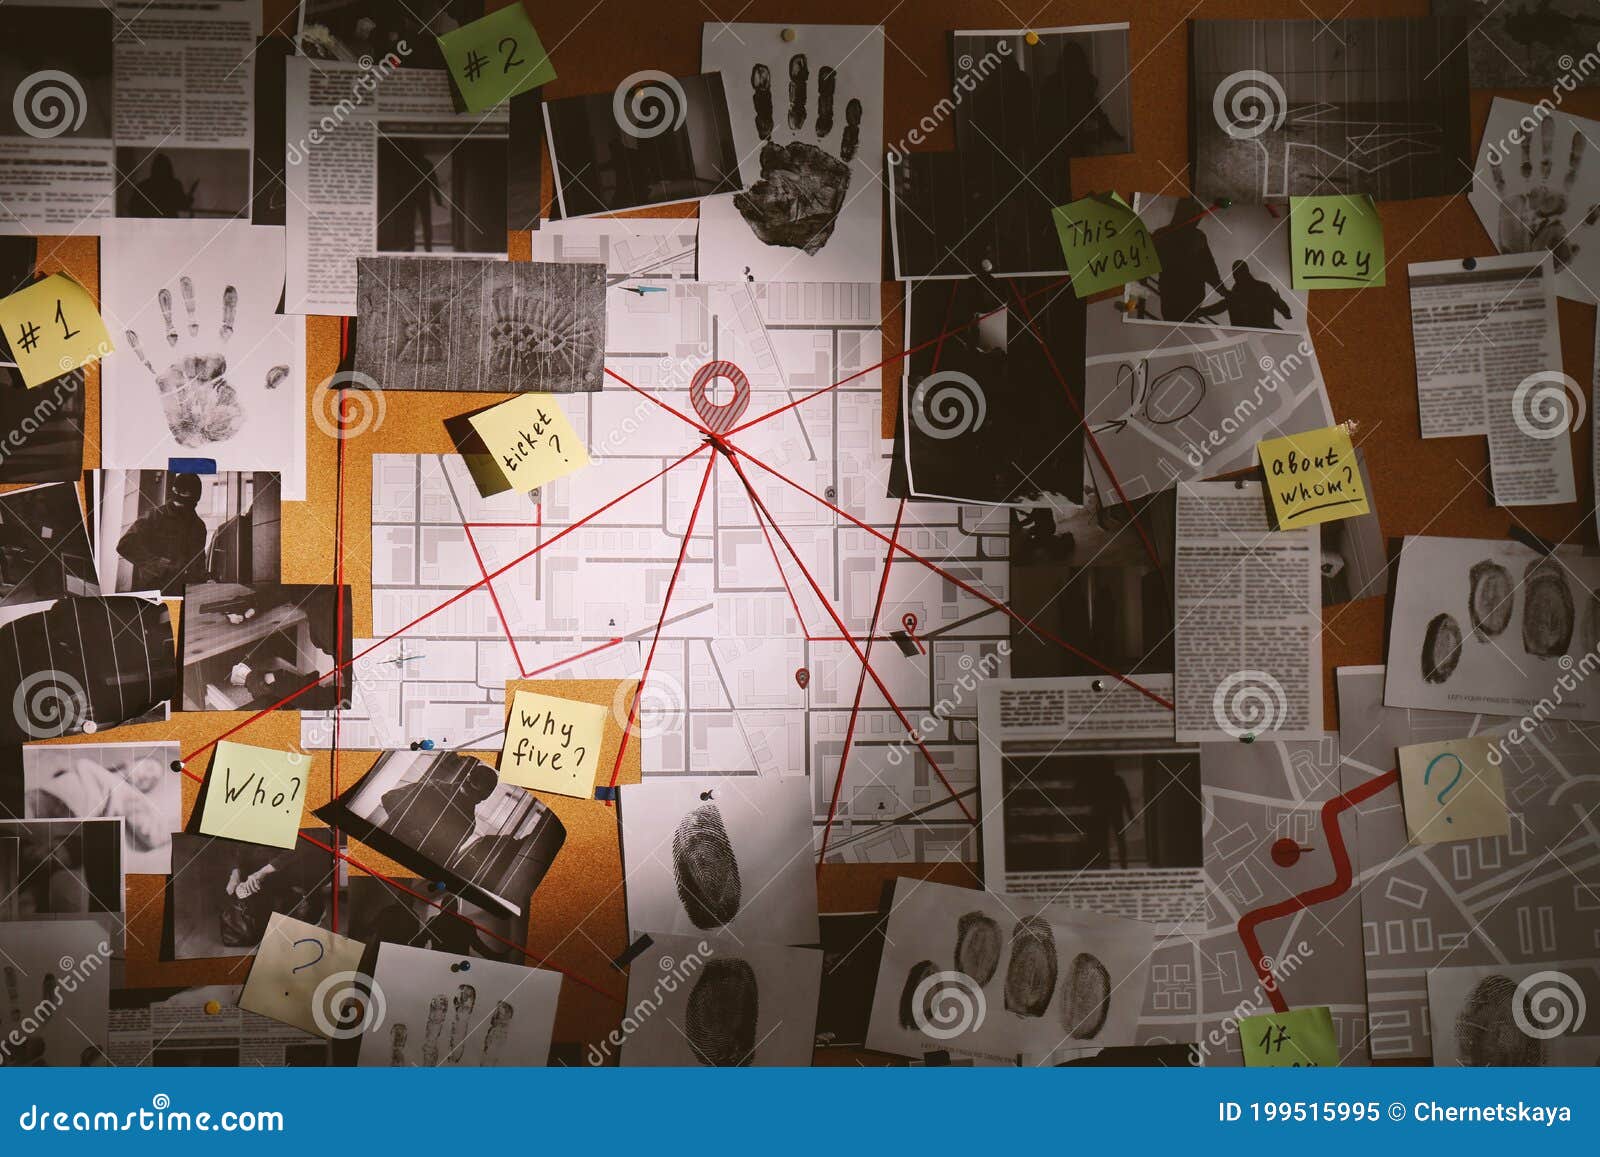 detective-board-fingerprints-photos-map-clues-connected-detective-board-fingerprints-photos-map-clues-connected-199515995.jpg